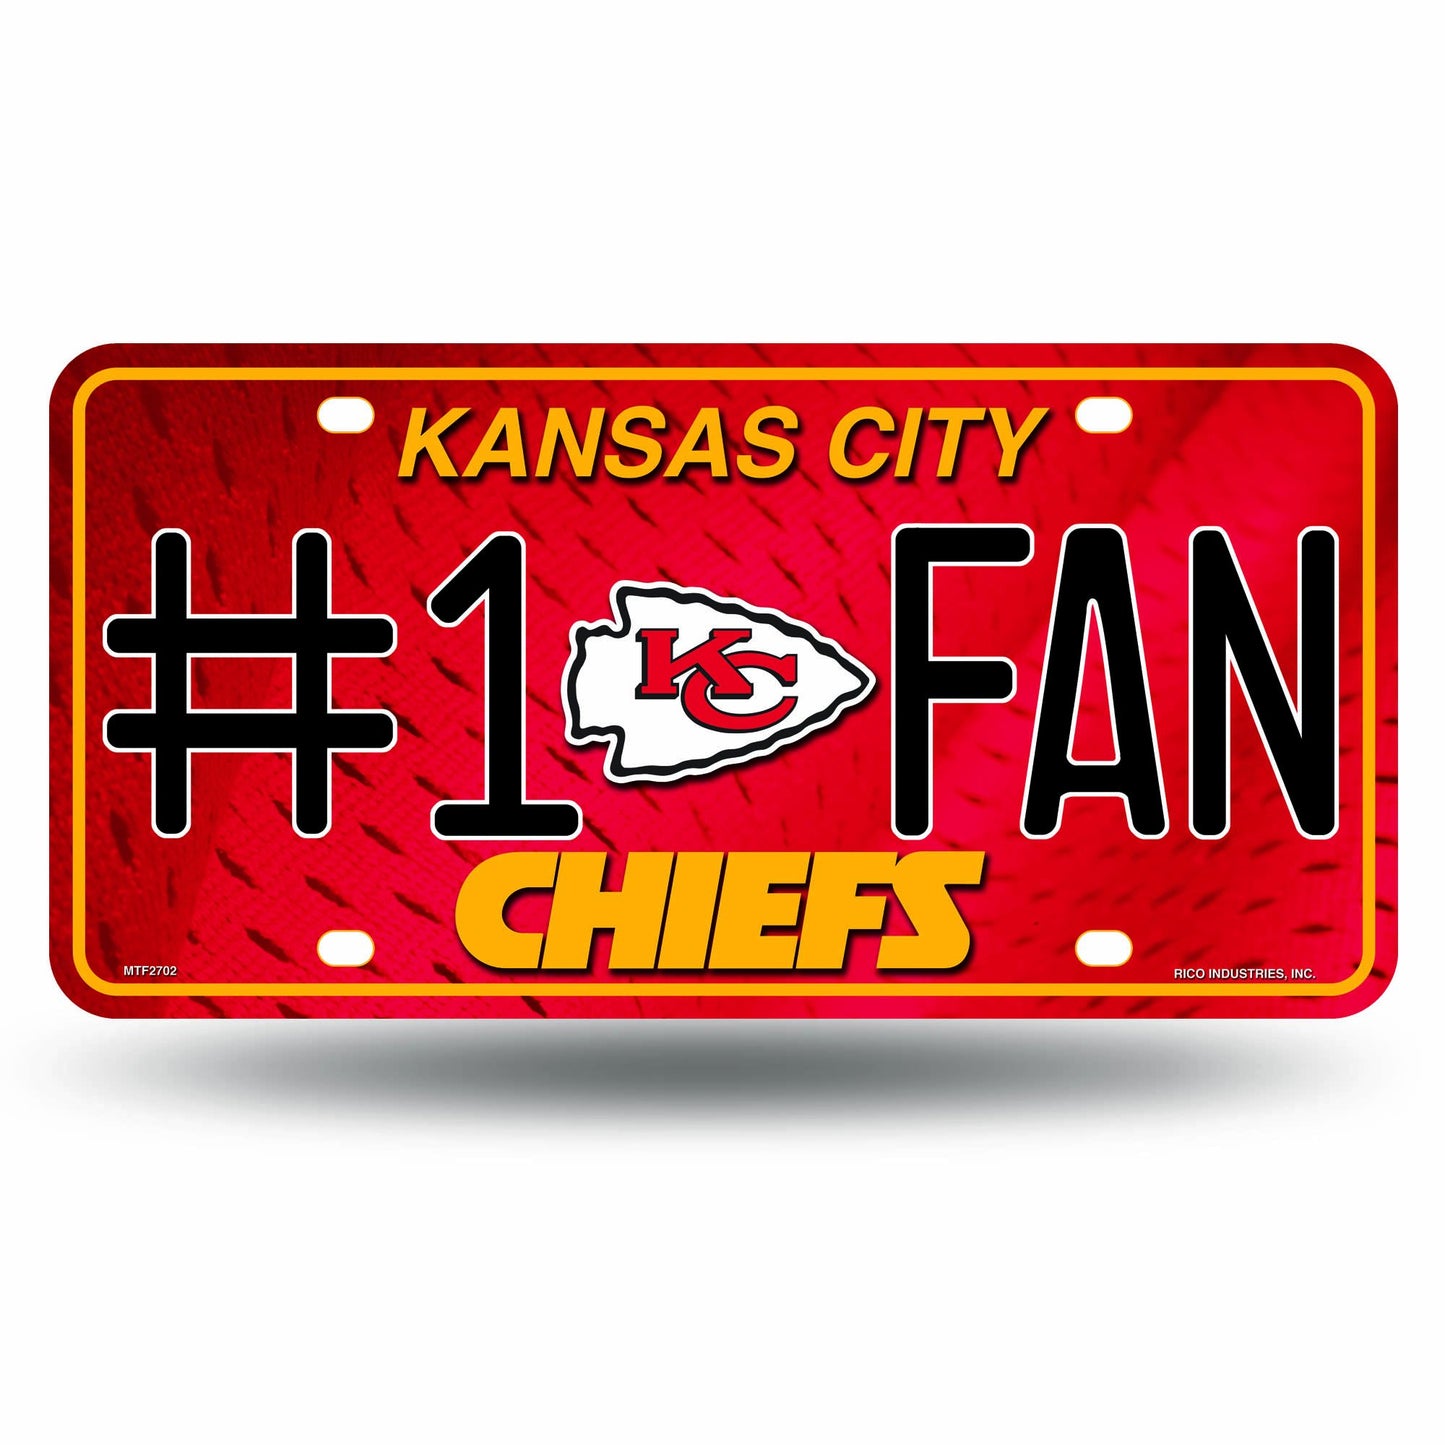 Kansas City Chiefs #1 Fan Metal License Plate by Rico